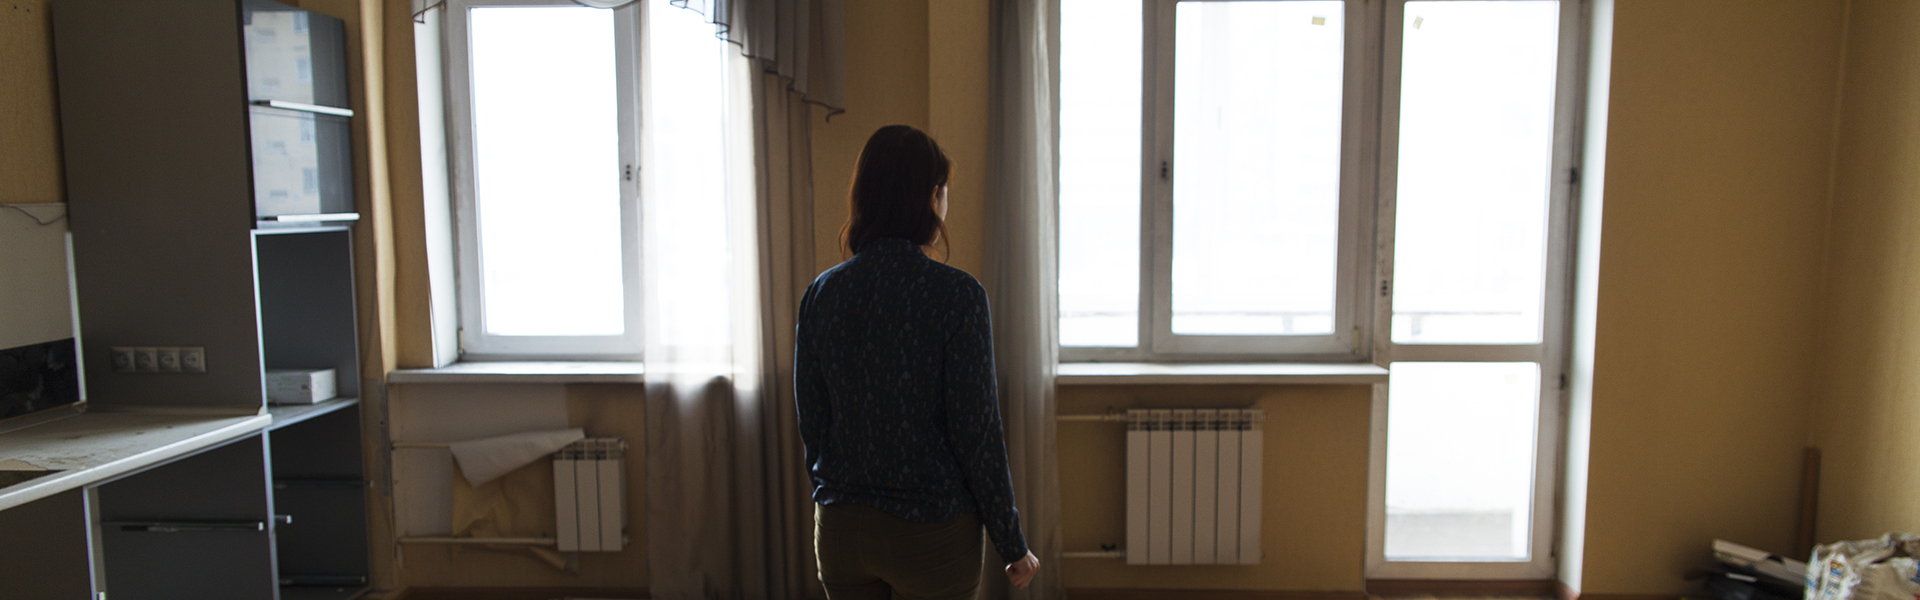 Комната страха: история жертвы семейного насилия